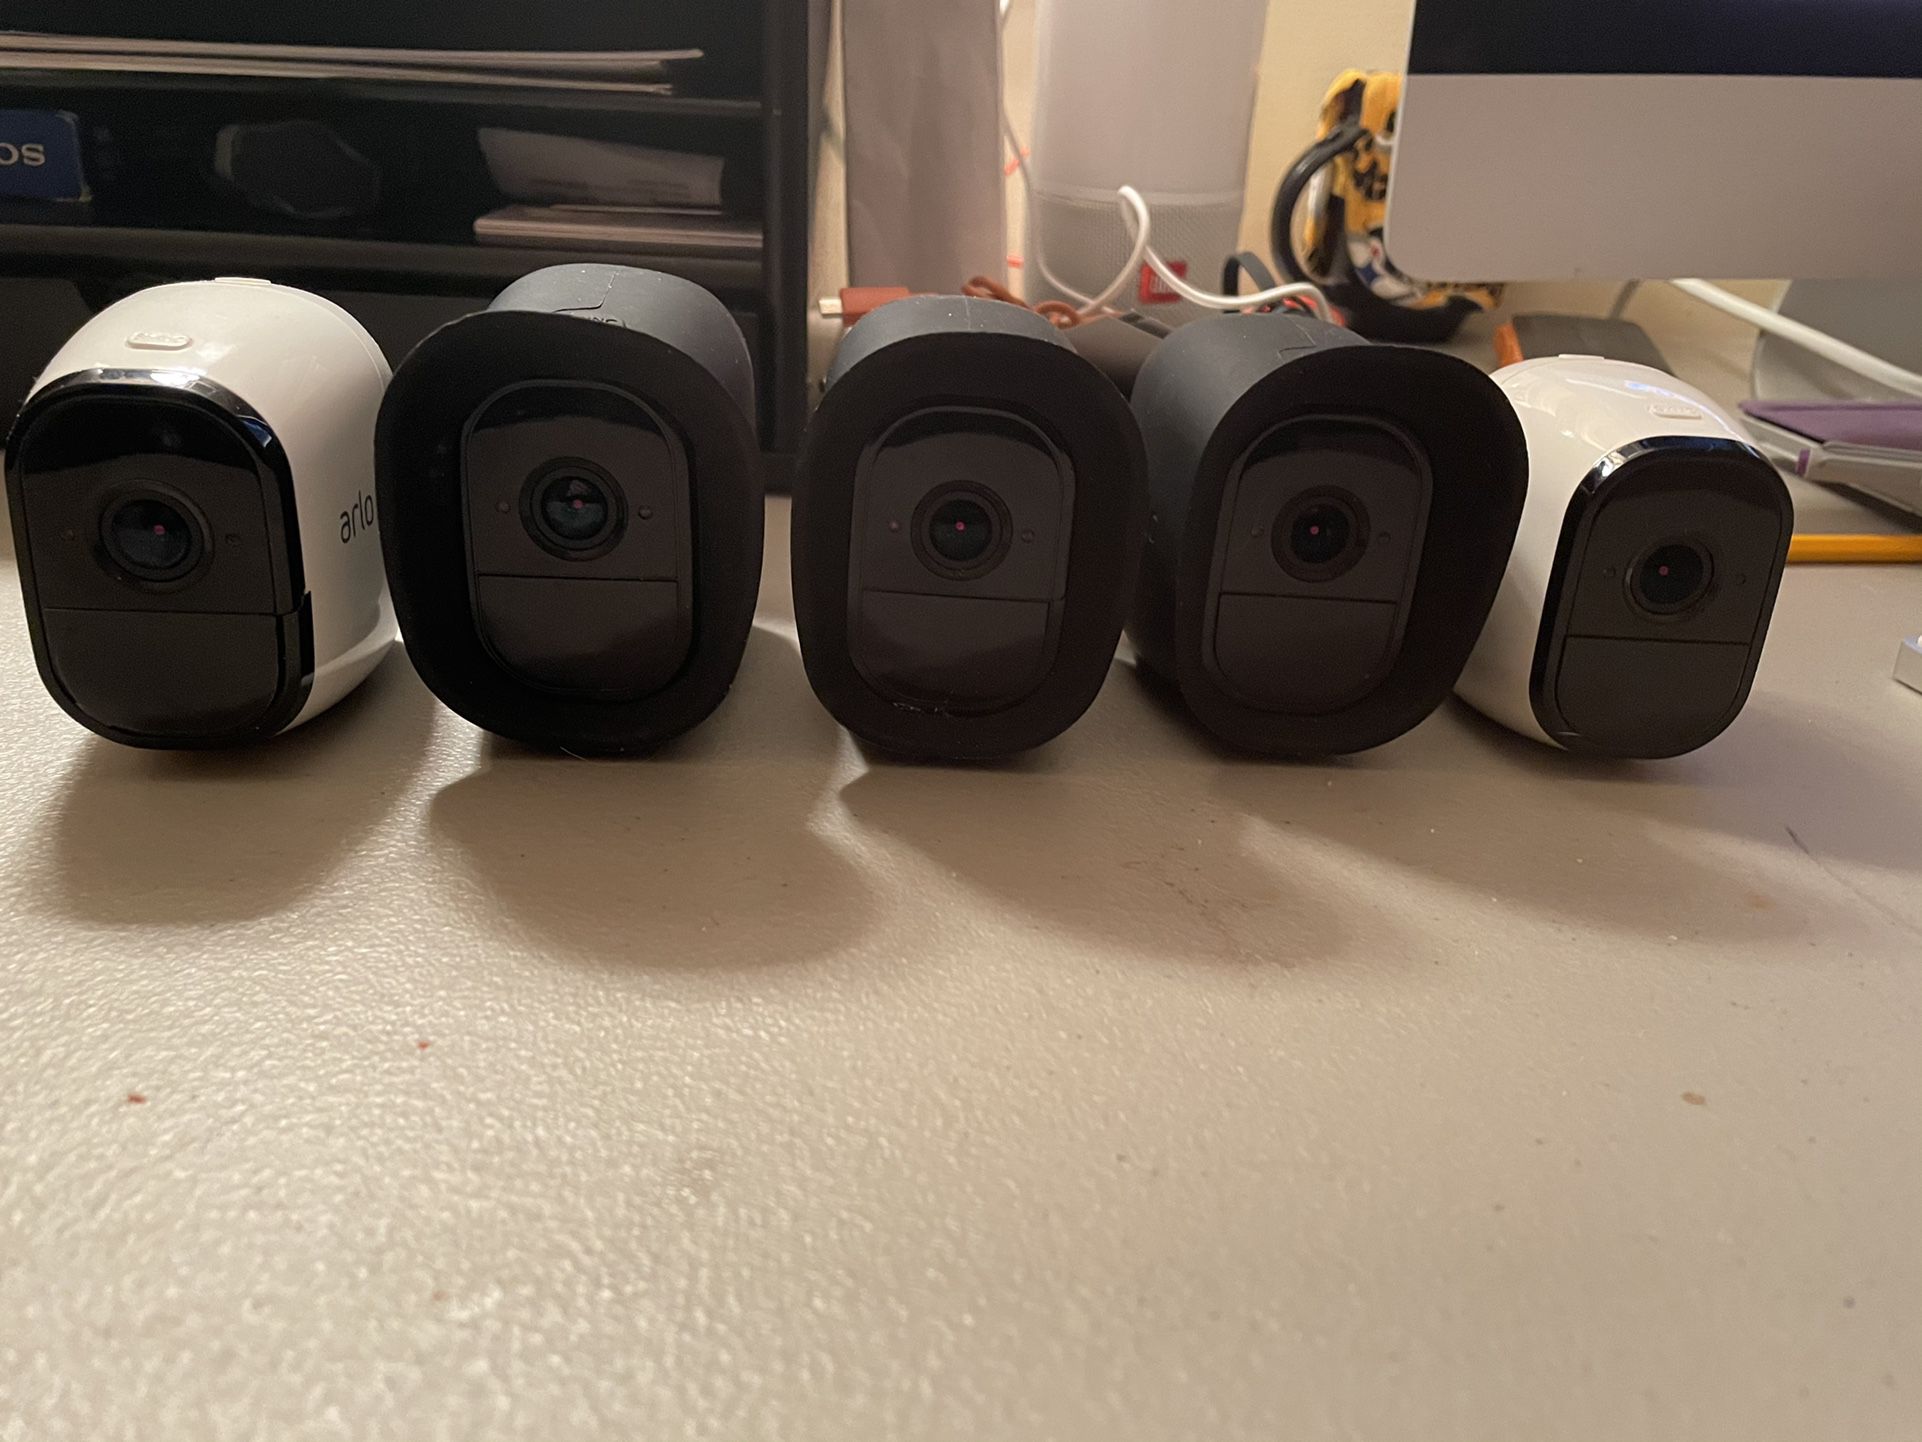 Arlo Pro Camera Security System